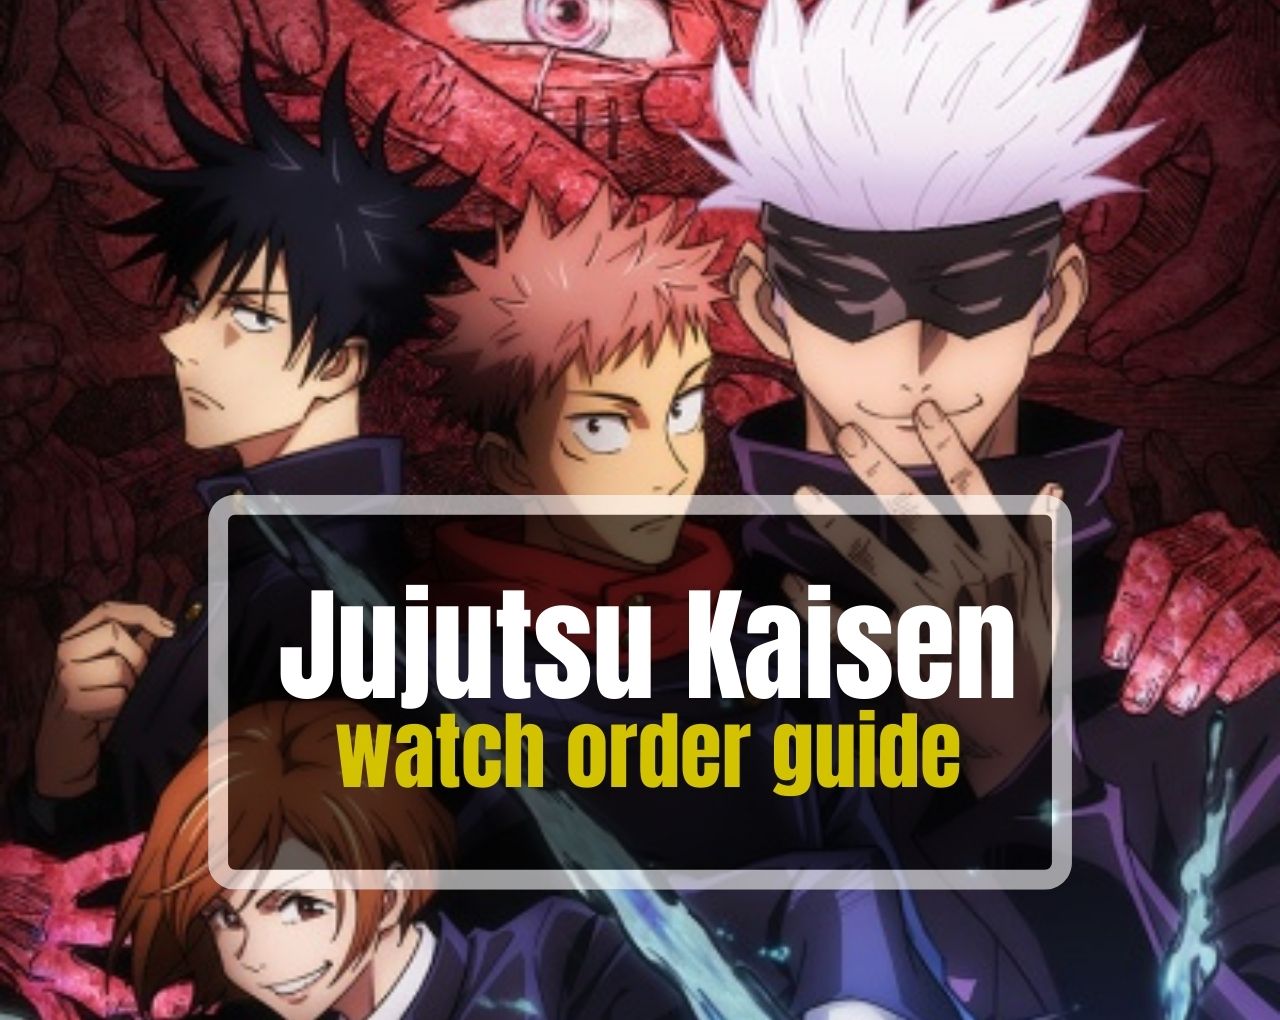 Jujutsu Kaisen watch order guide